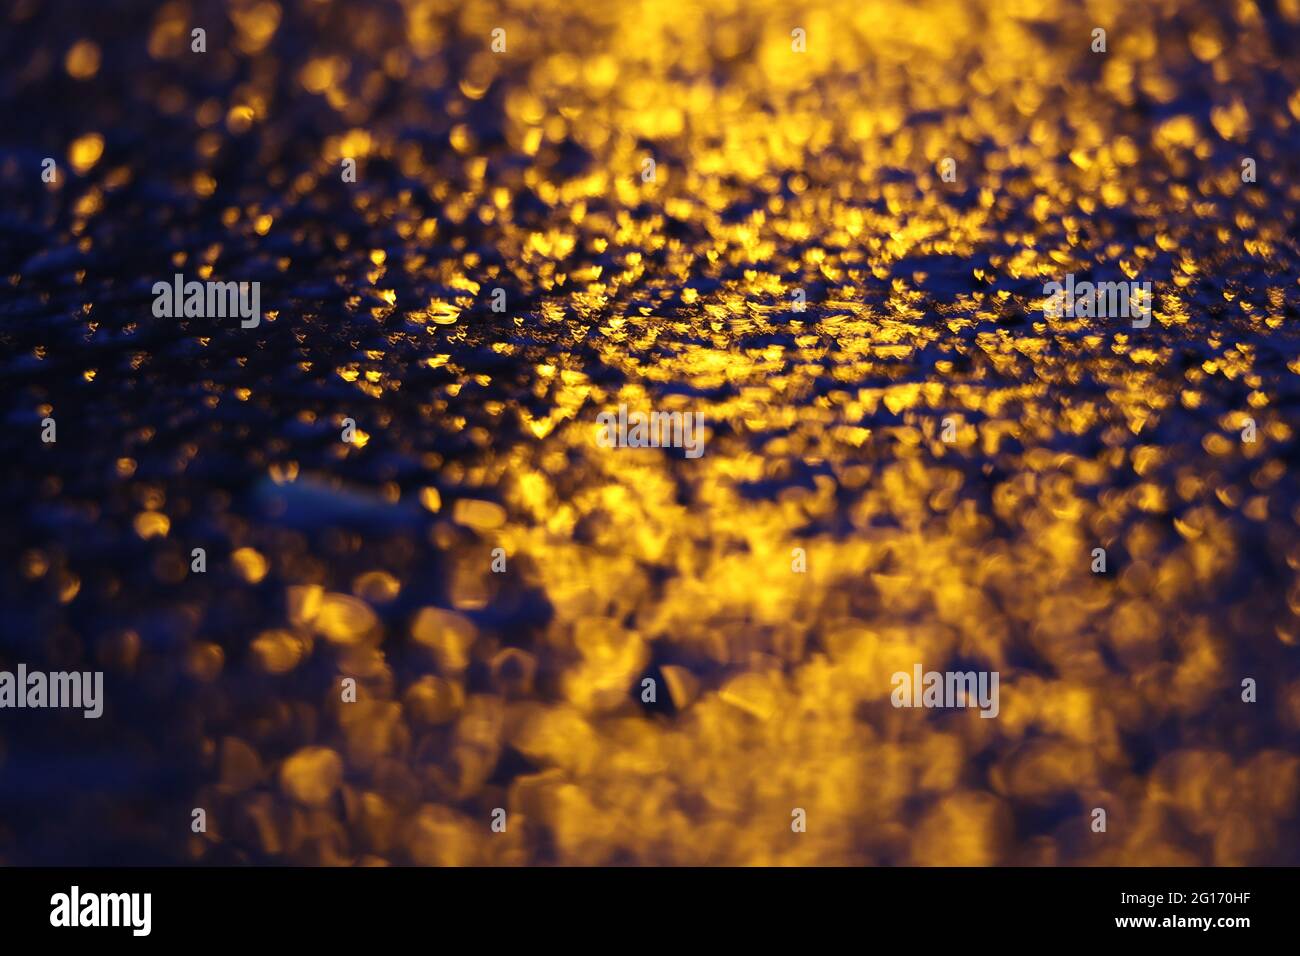 imagen abstracta de la luz amarilla que se refleja en una superficie negra irregular Foto de stock